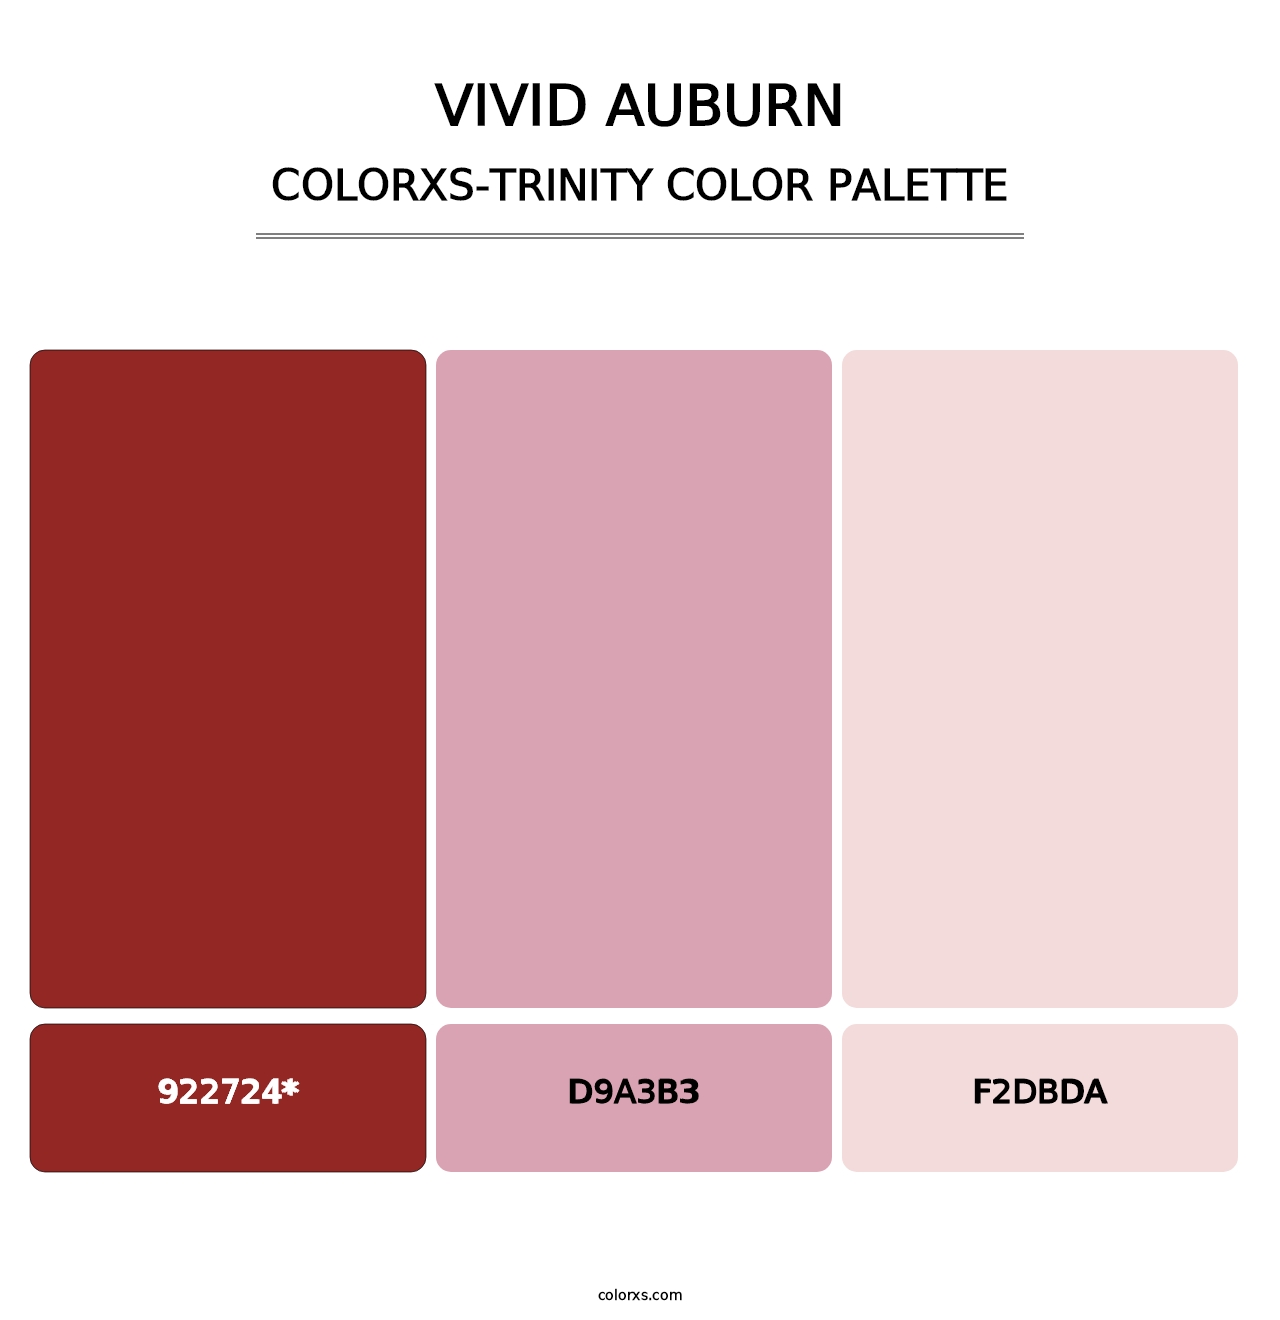 Vivid Auburn - Colorxs Trinity Palette